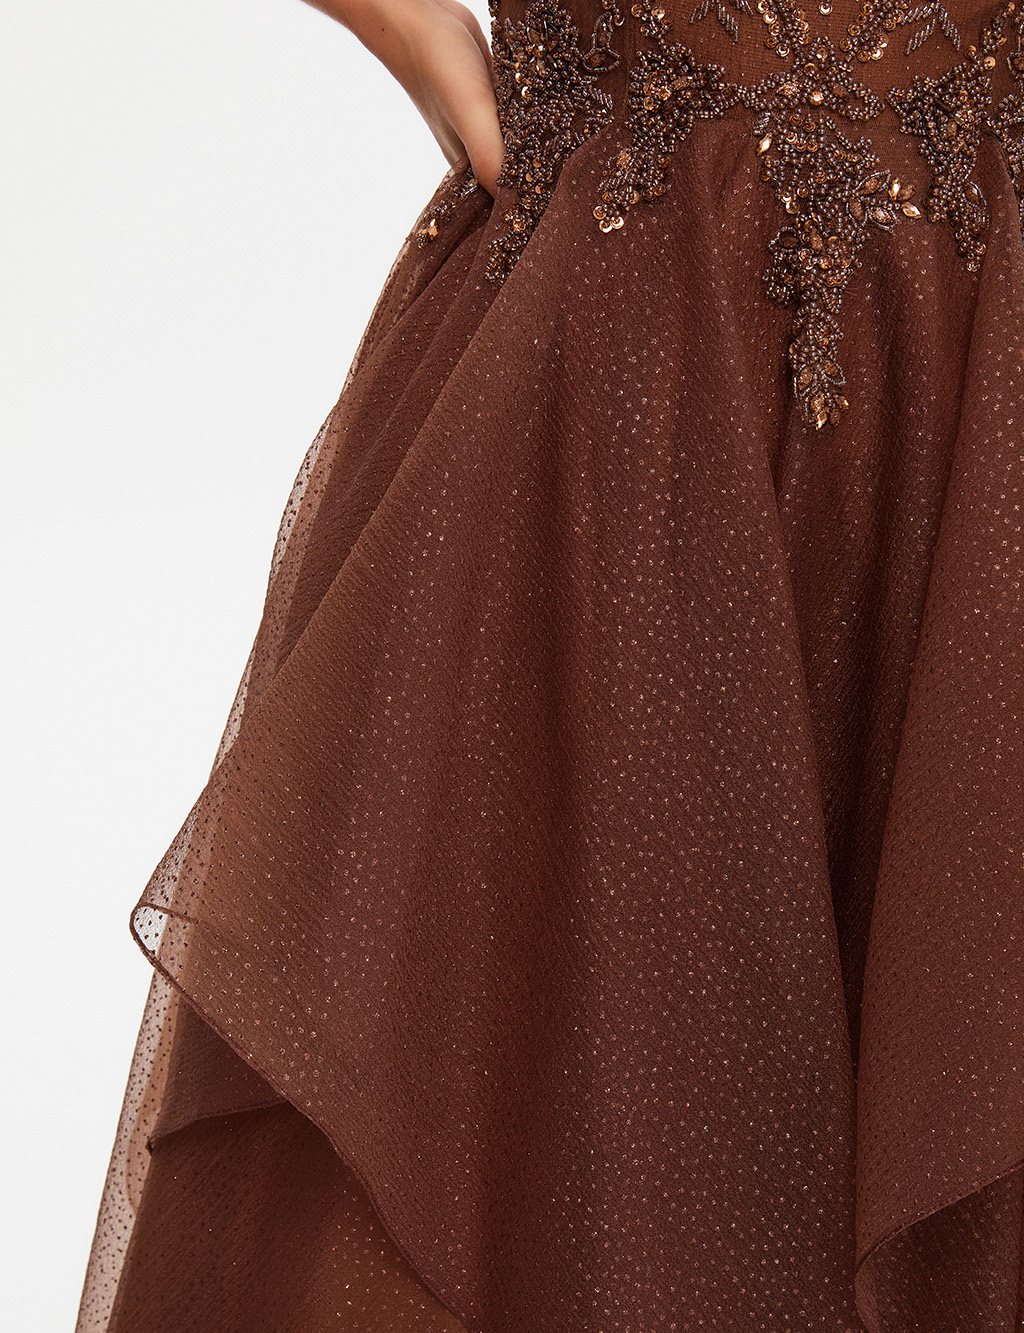 TIARA Thin Straps Embroidered Evening Dress Bronze Brown